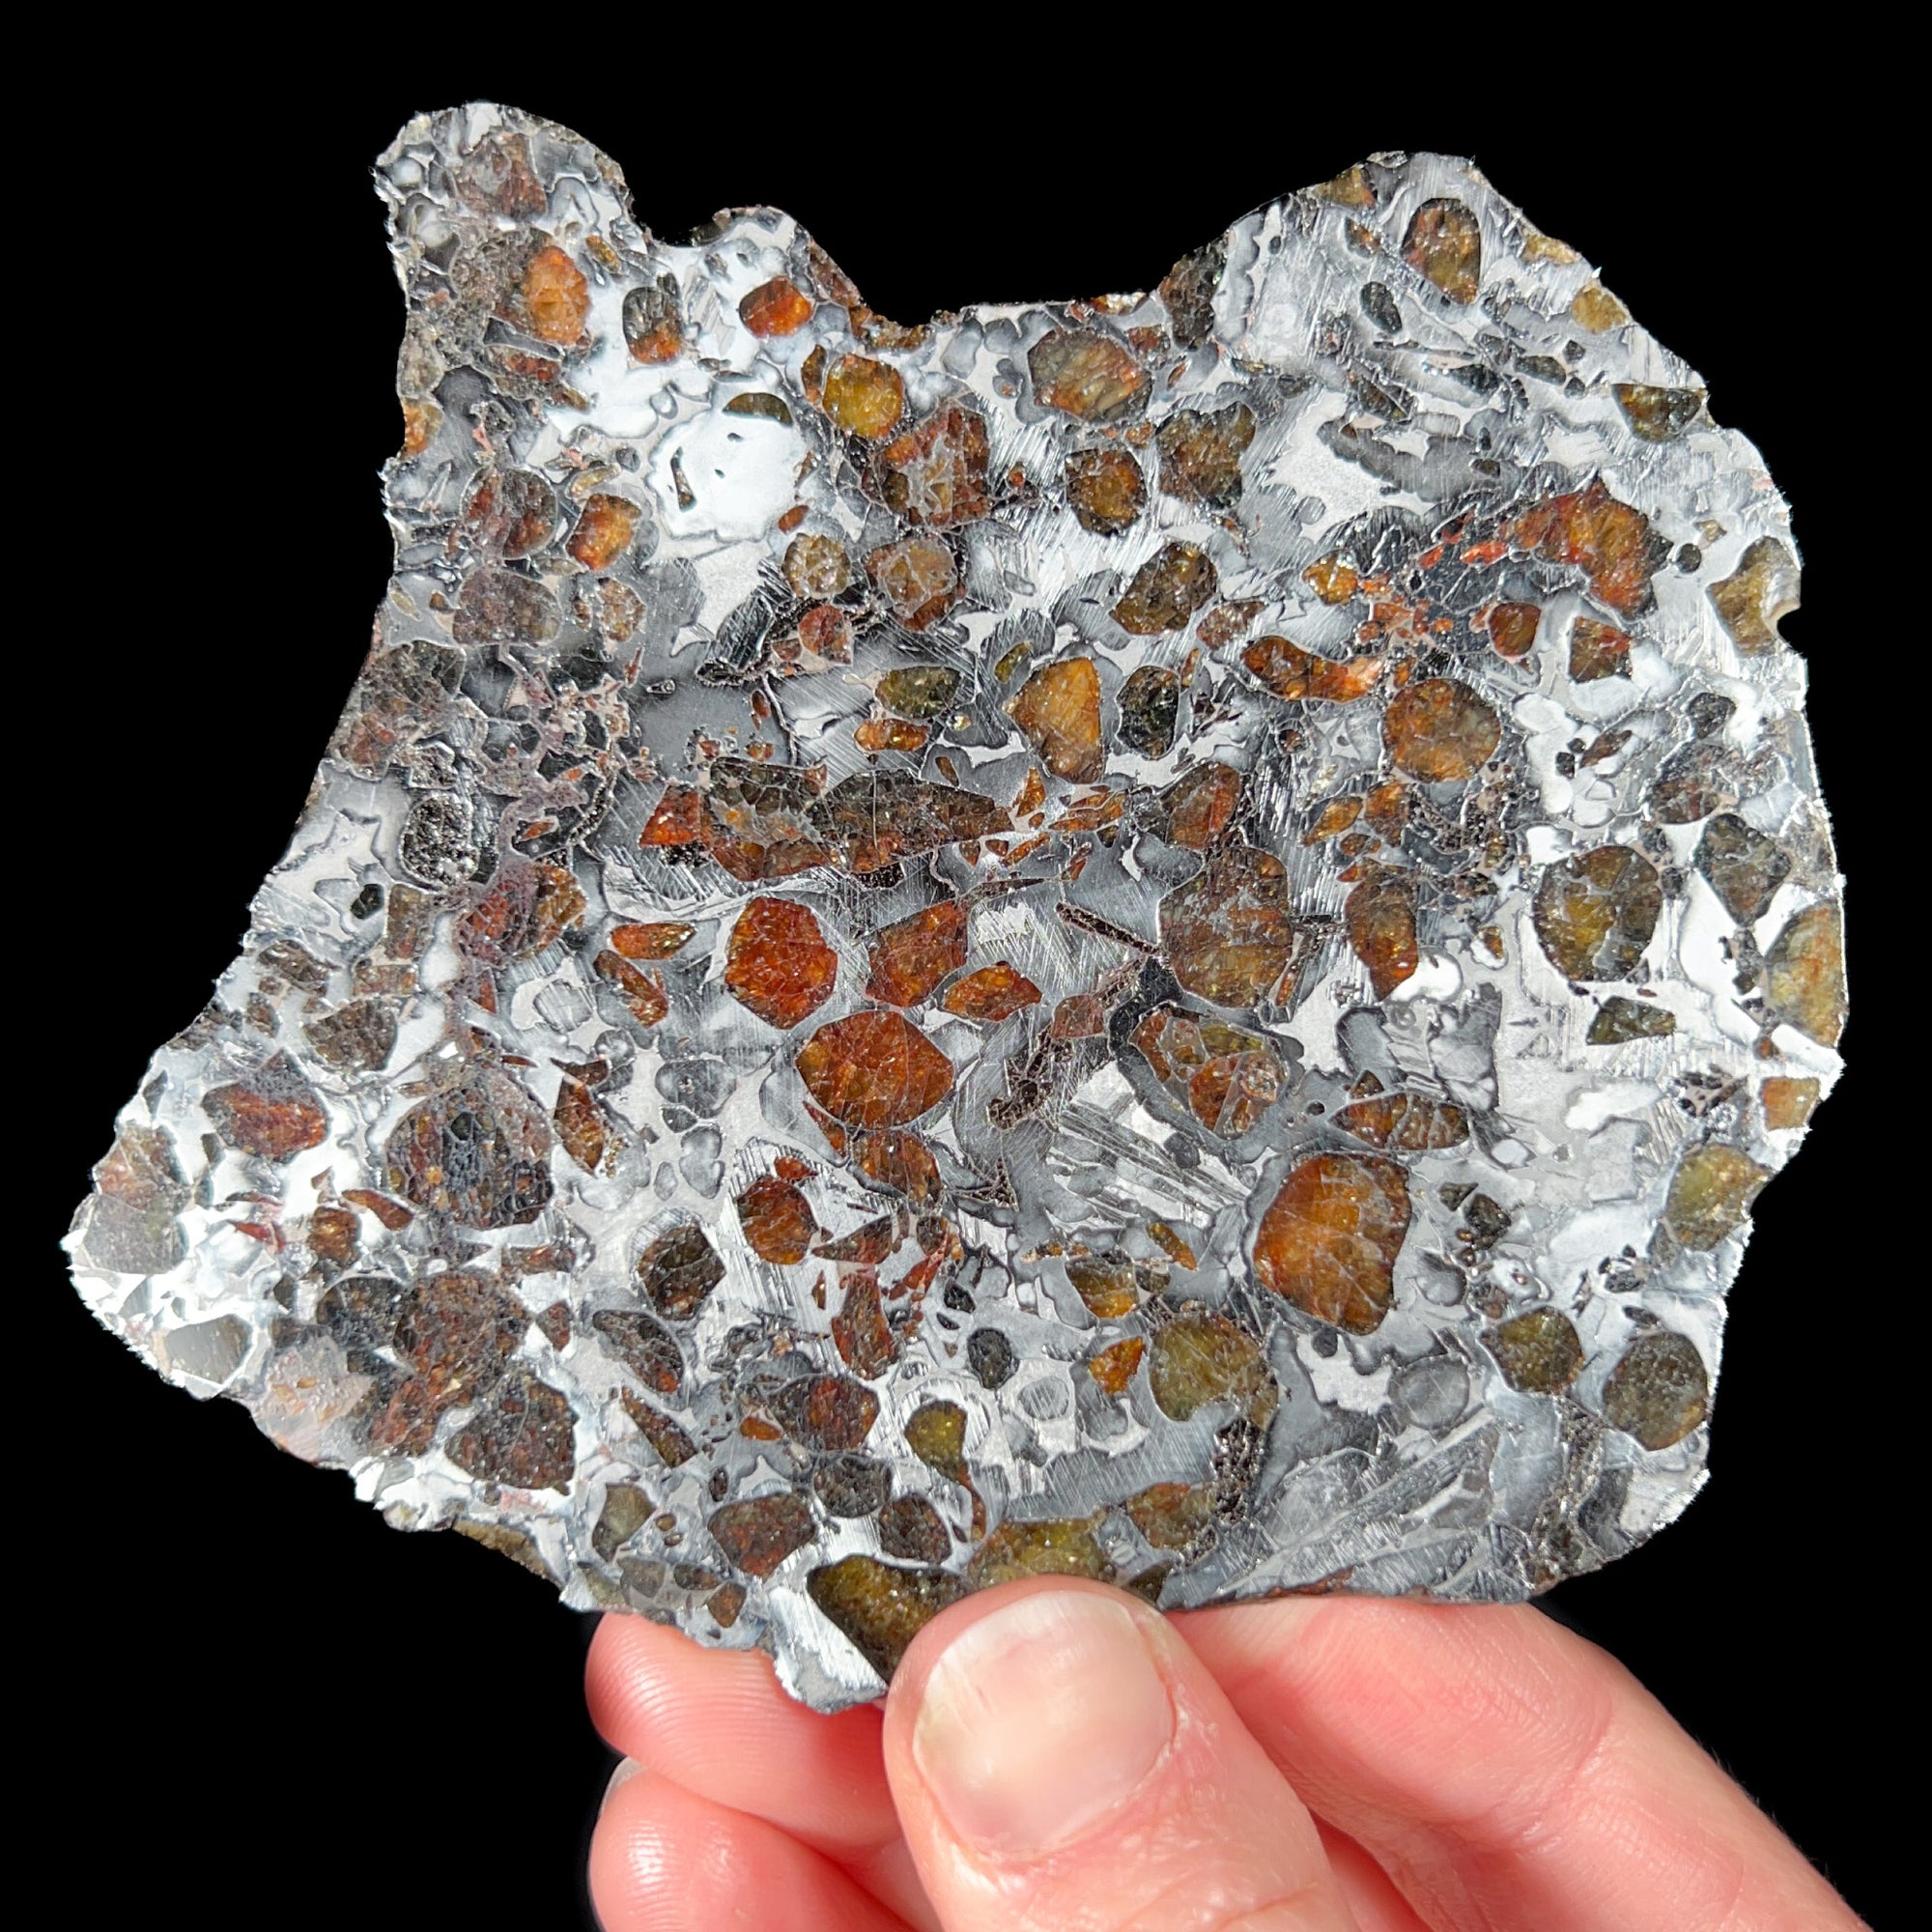 Backlit Pallasite Meteorite Displaying gem Olivine Crystals